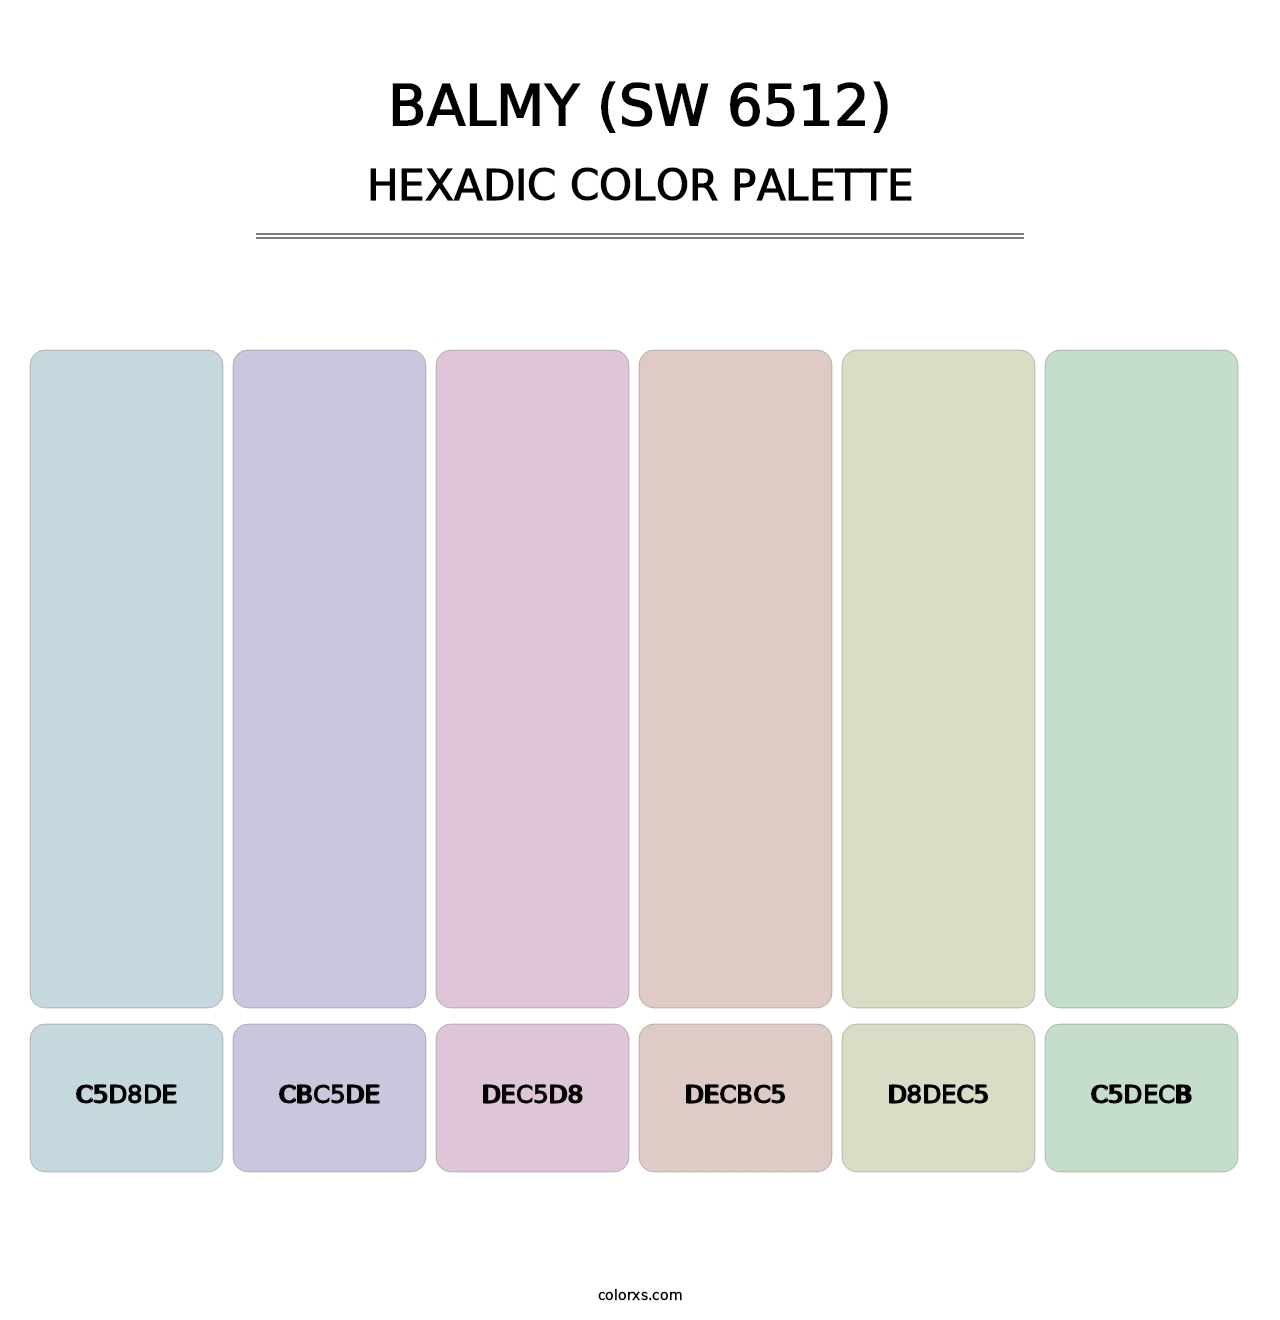 Balmy (SW 6512) - Hexadic Color Palette